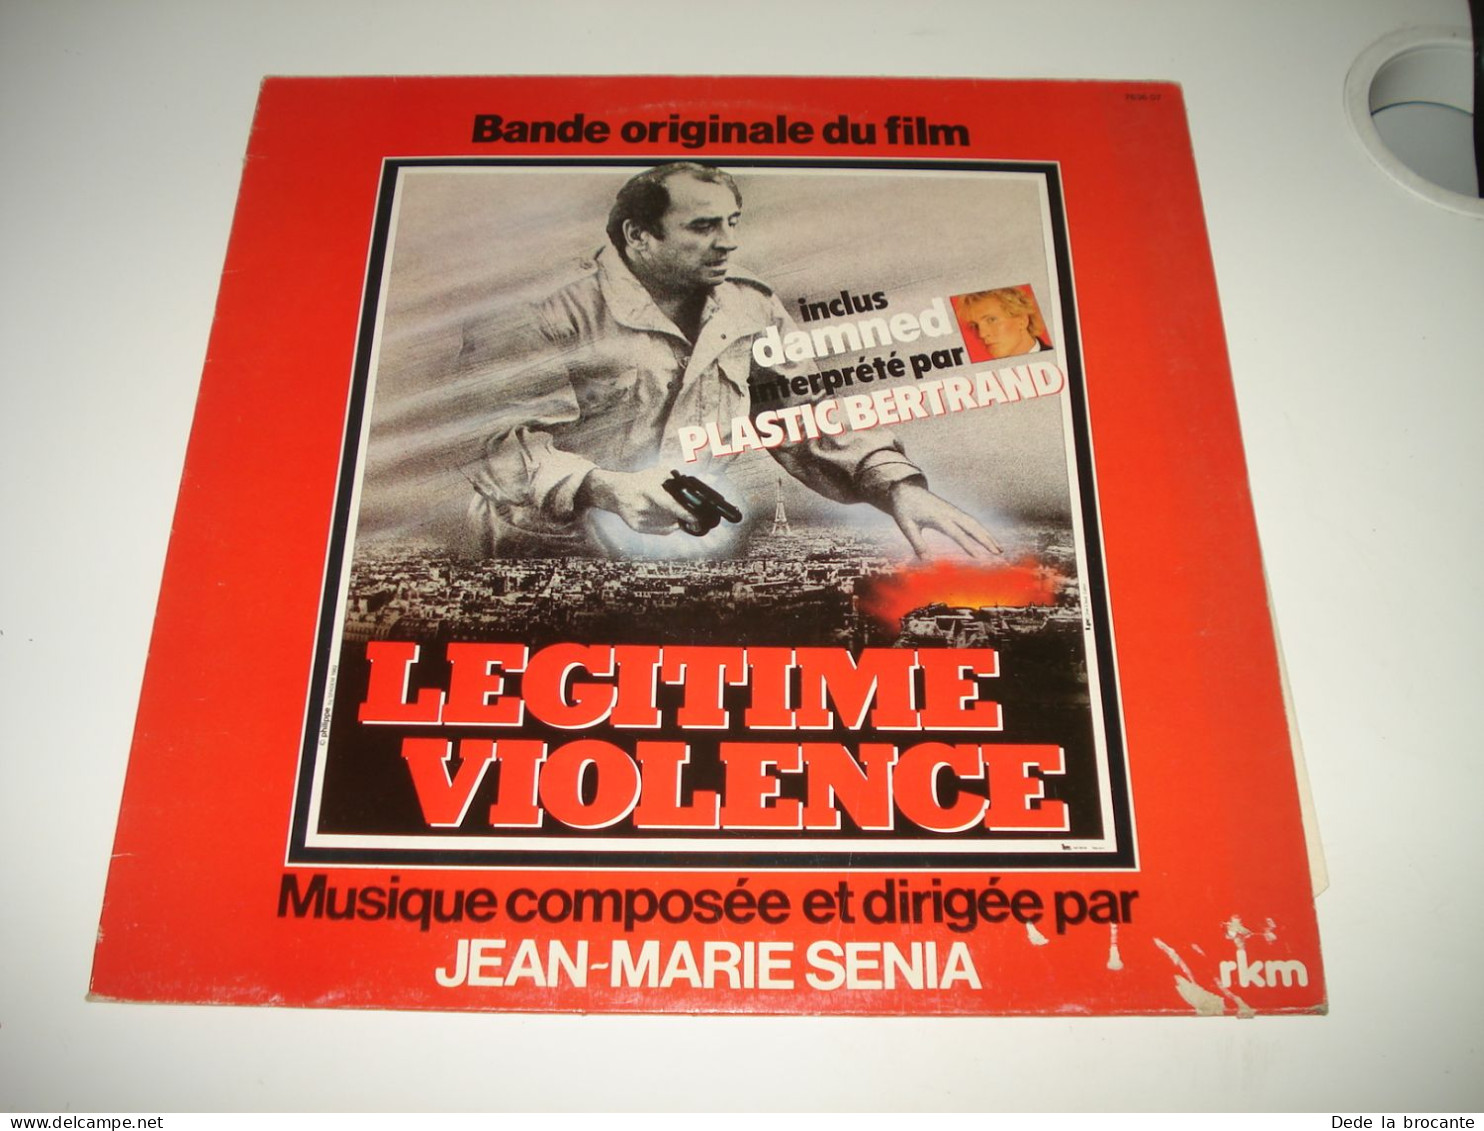 B7 / LP  " Légitime Violence " Senia Plastic Bertrand - 7636 07 - Fr 1982 - M/VG - Soundtracks, Film Music